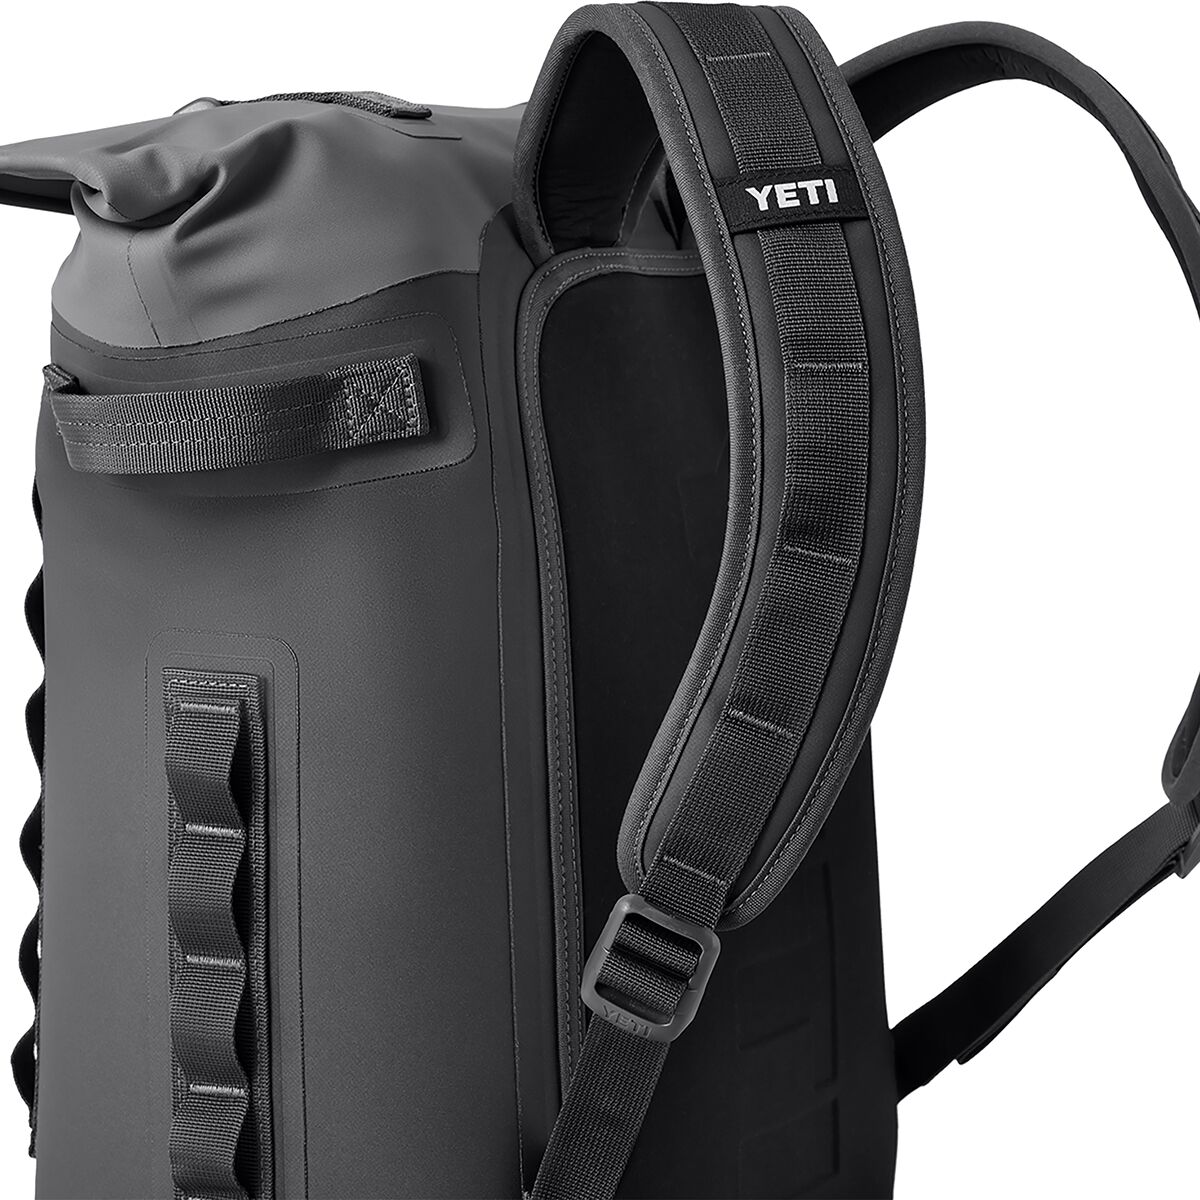 Yeti M20 Backpack Soft Cooler, Golf Equipment: Clubs, Balls, Bags